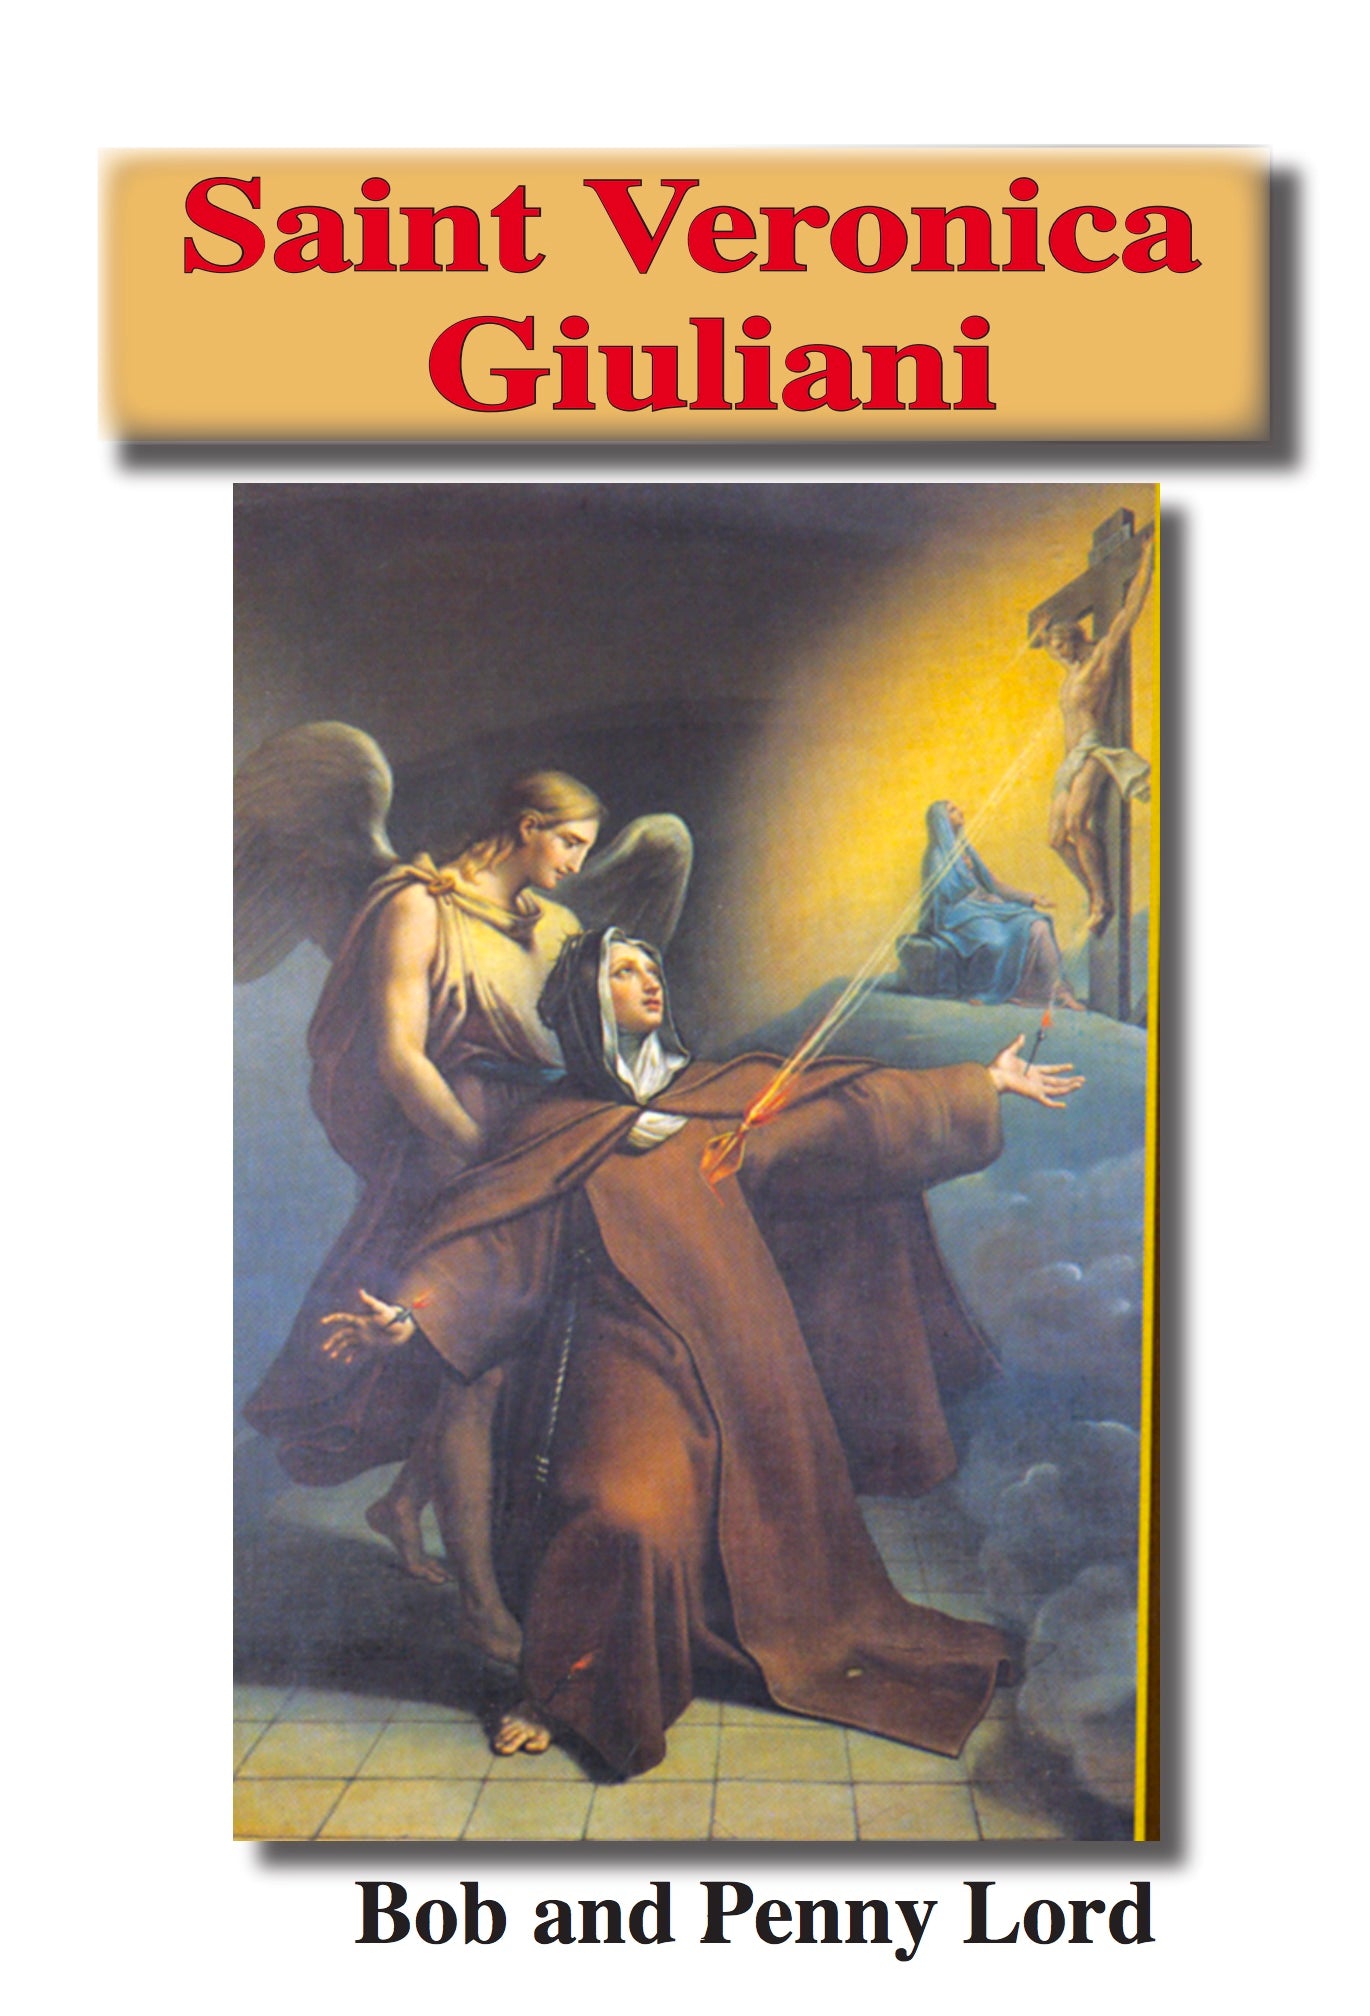 Saint Veronica Giuliani Minibook - Bob and Penny Lord